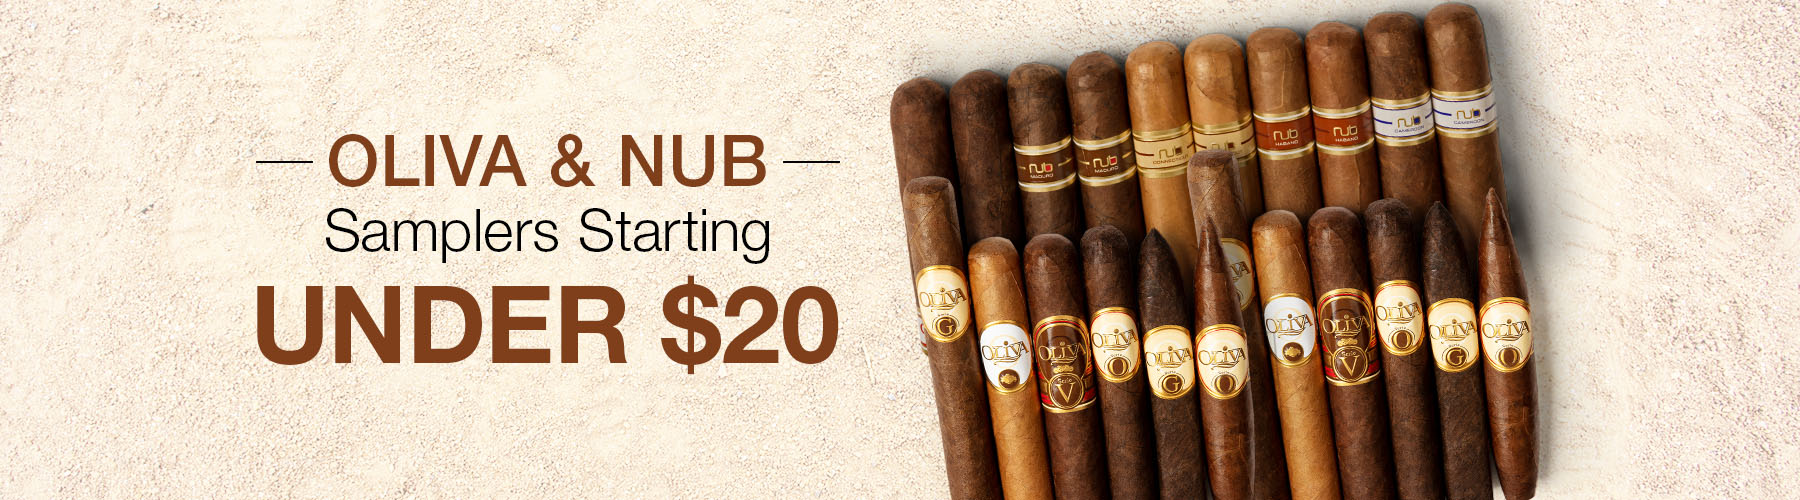 Oliva and Nub Samplers Starting under $20!